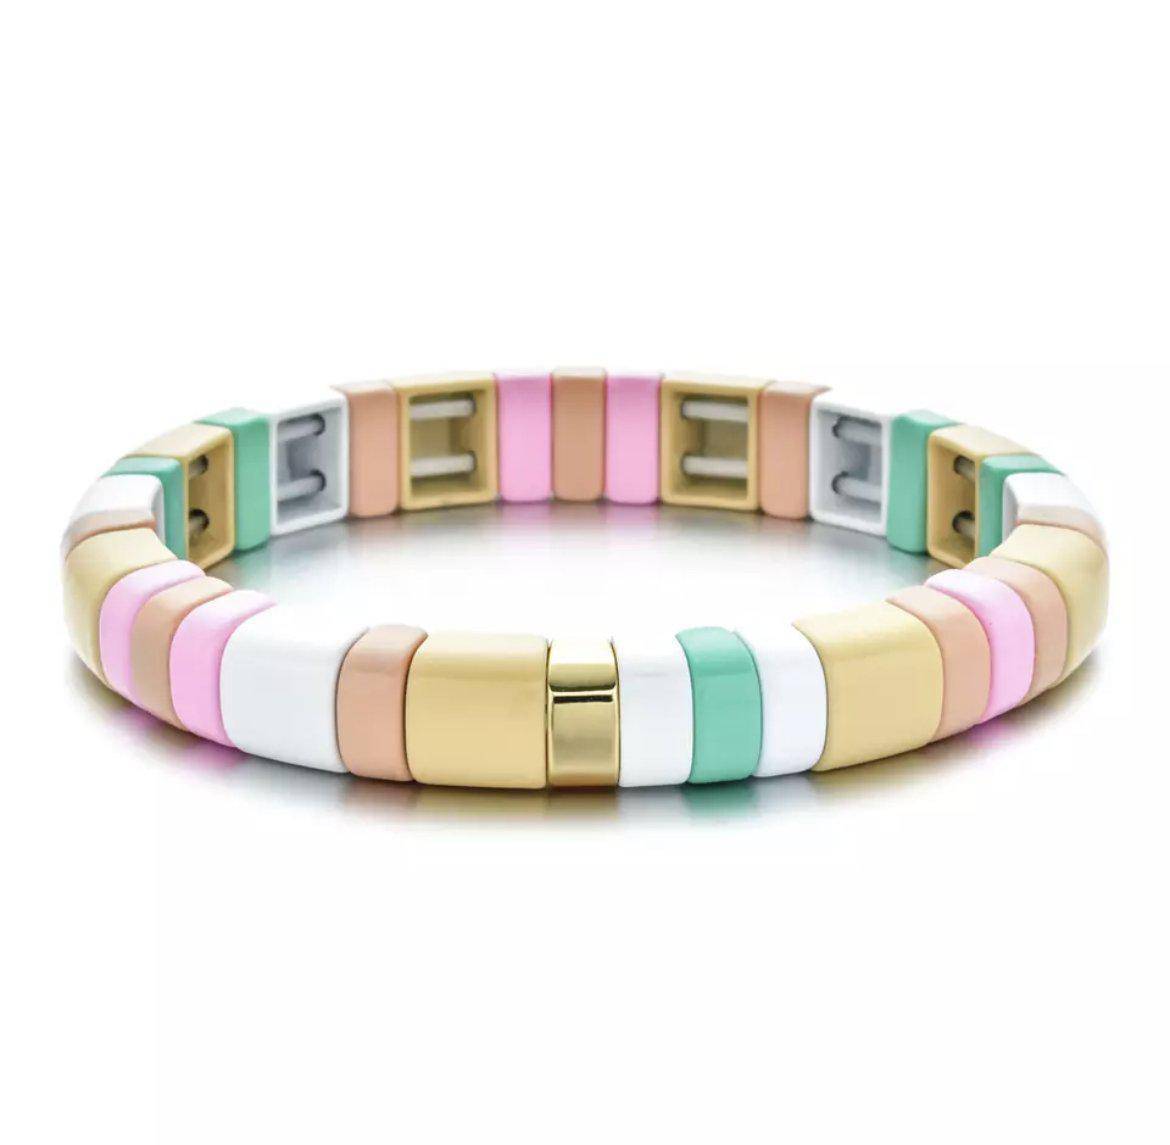 Stretchy Tile Multi-Color Bracelet - Twinkle Twinkle Little One